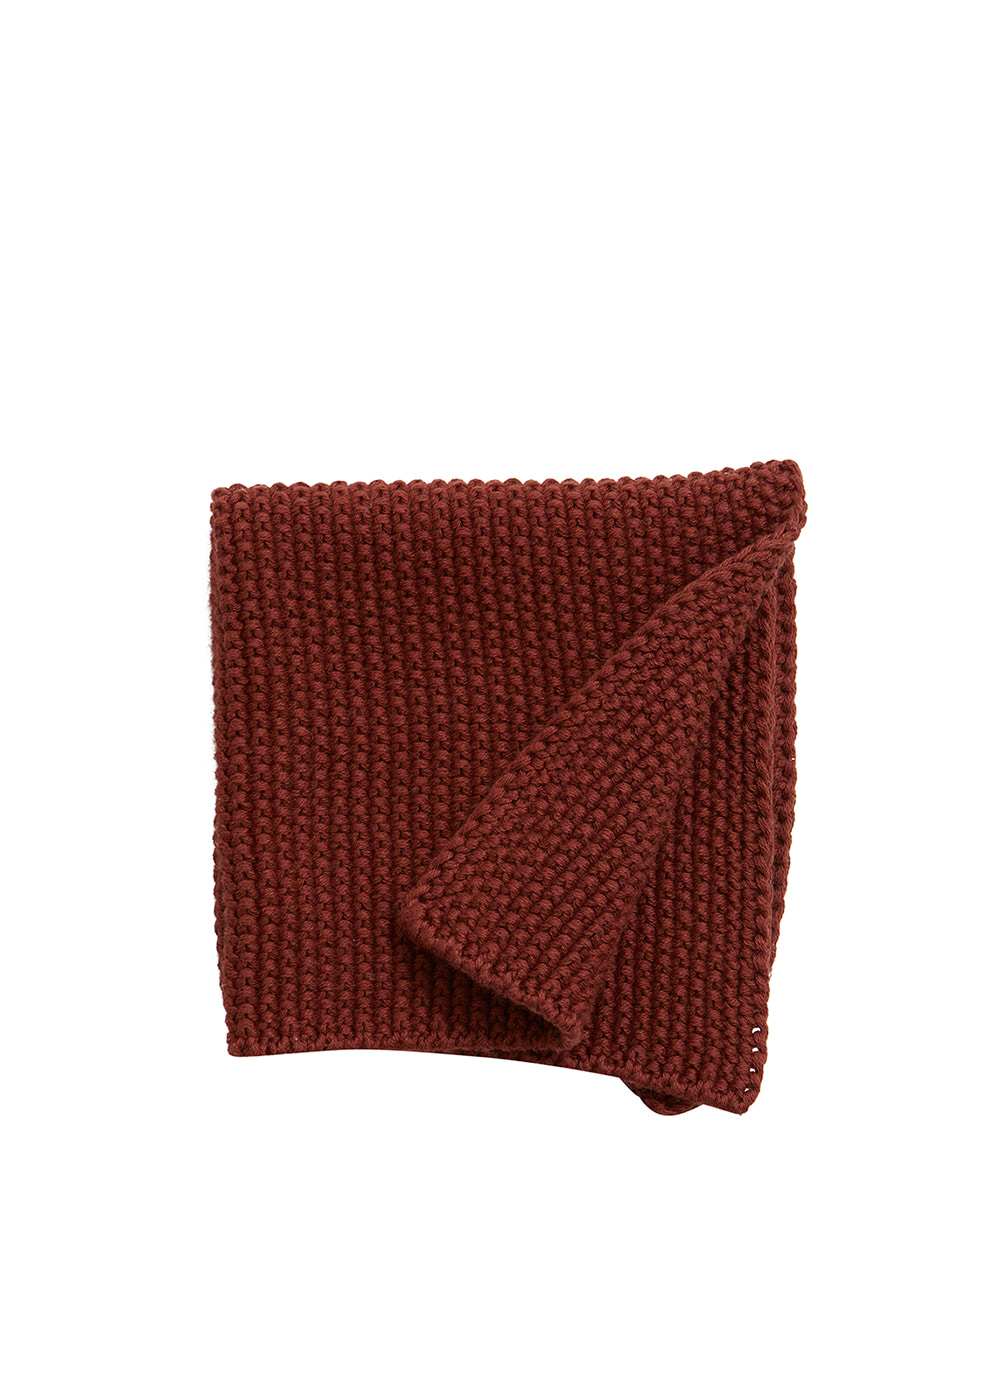 dish cloth, knit, rusty red